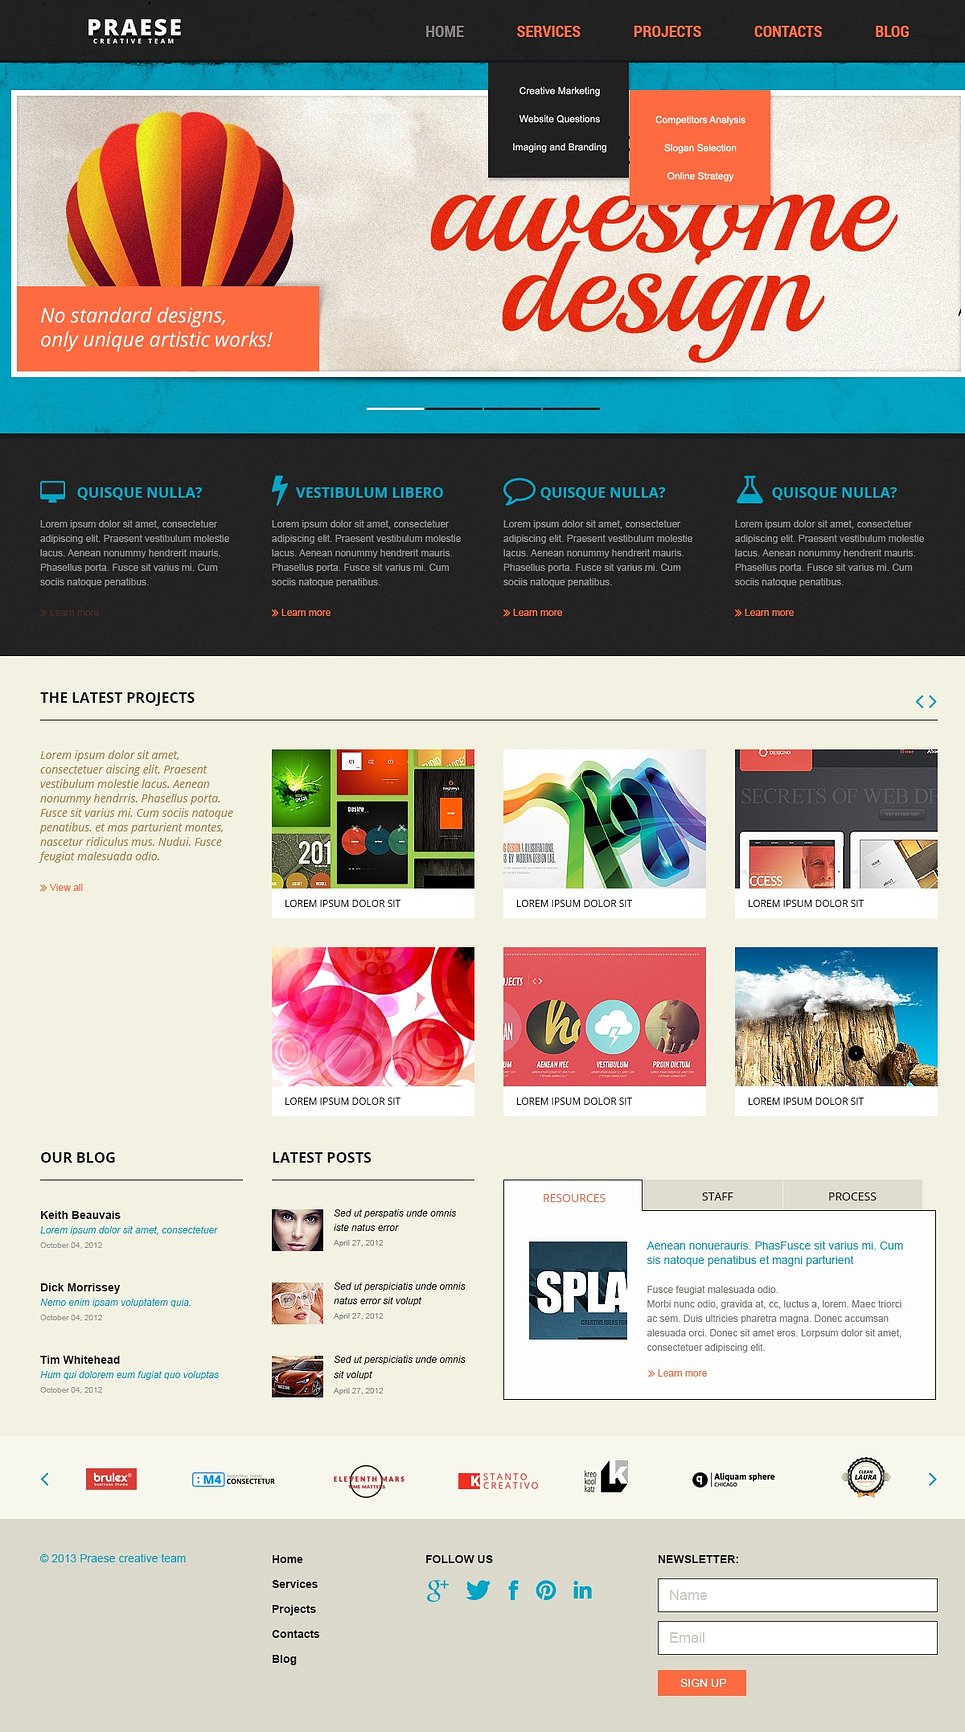 Website Templates Web Design ~ angelicbydesign